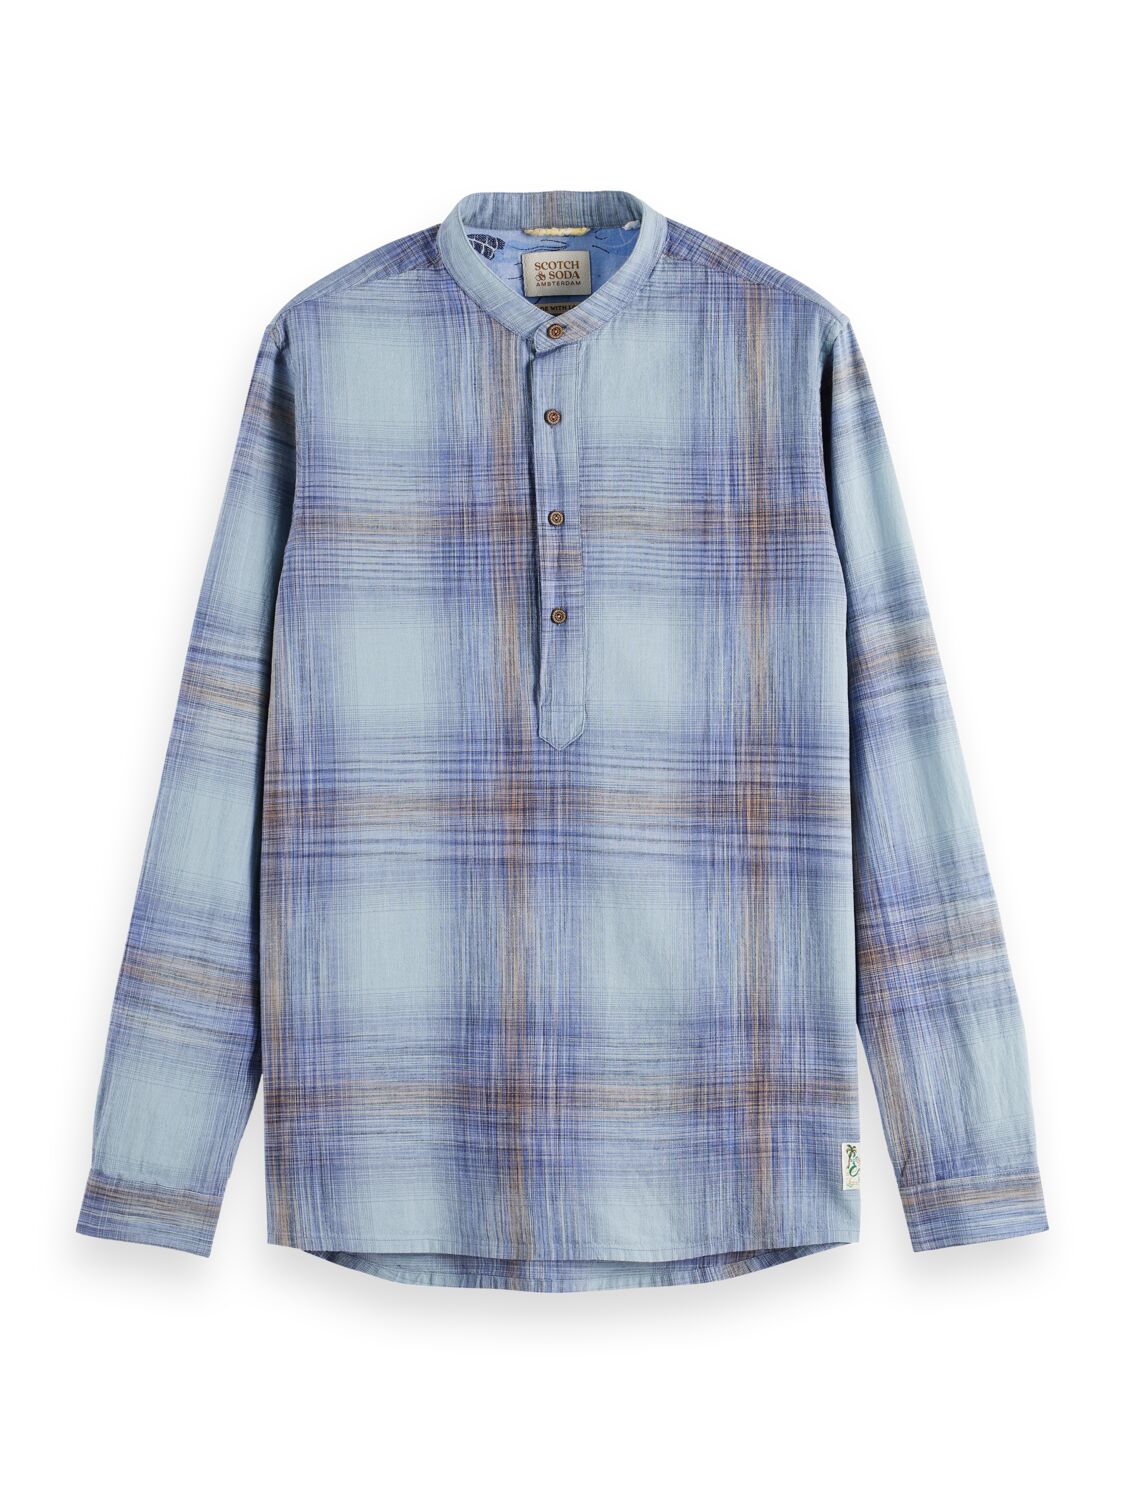 Scotch & Soda Kaftan In Checks & Stripes - Light Blue - 1 - Tops - Long sleeve shirt